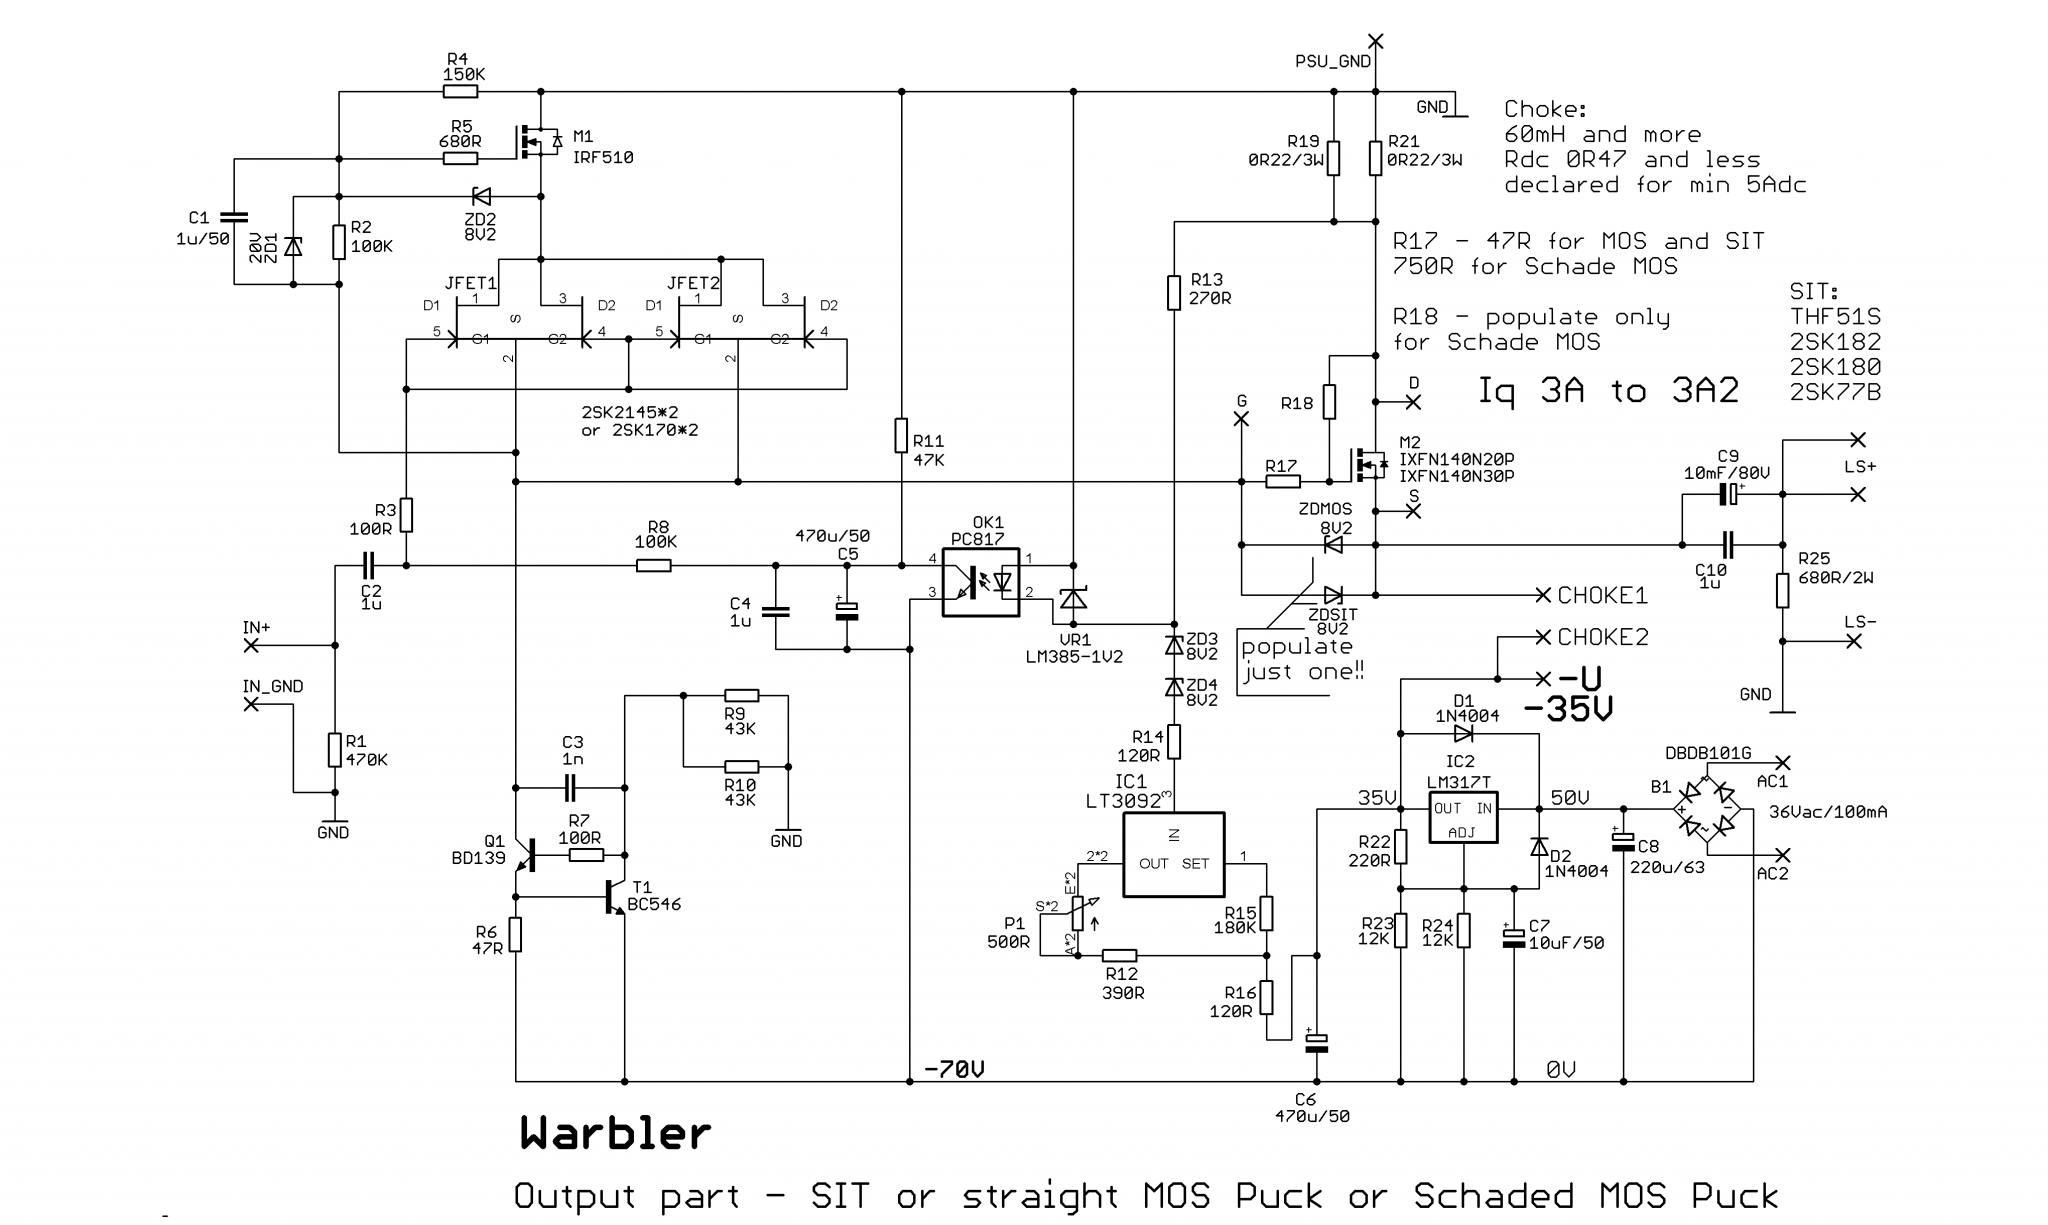 warbler-schm-png.1069190